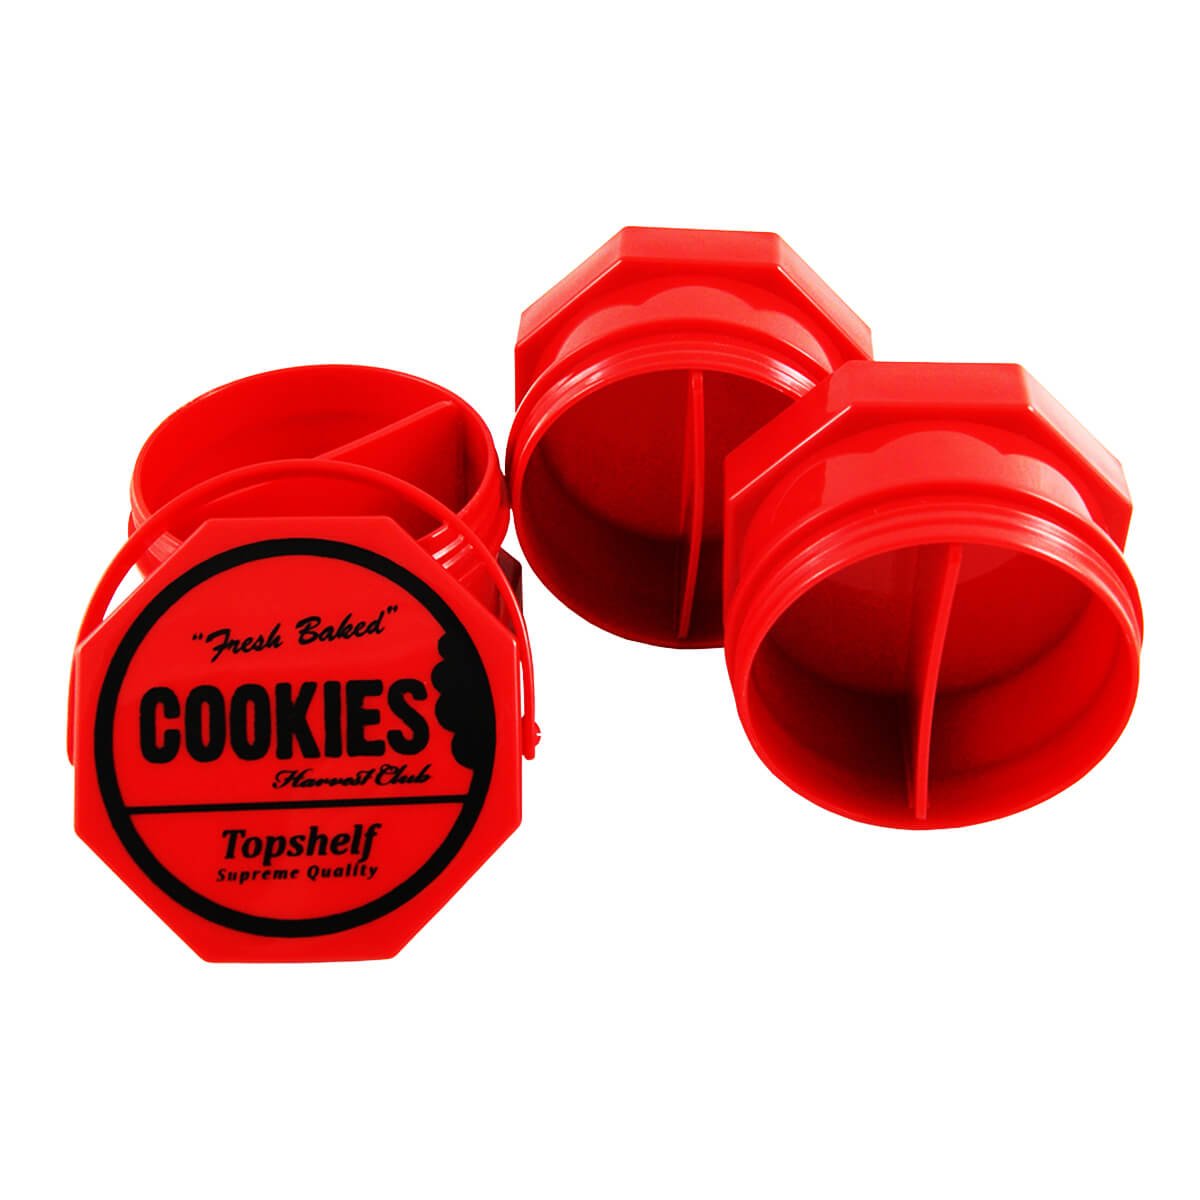 Wholesale Cookies 3 Parts Black Stacked Small Storage Jar